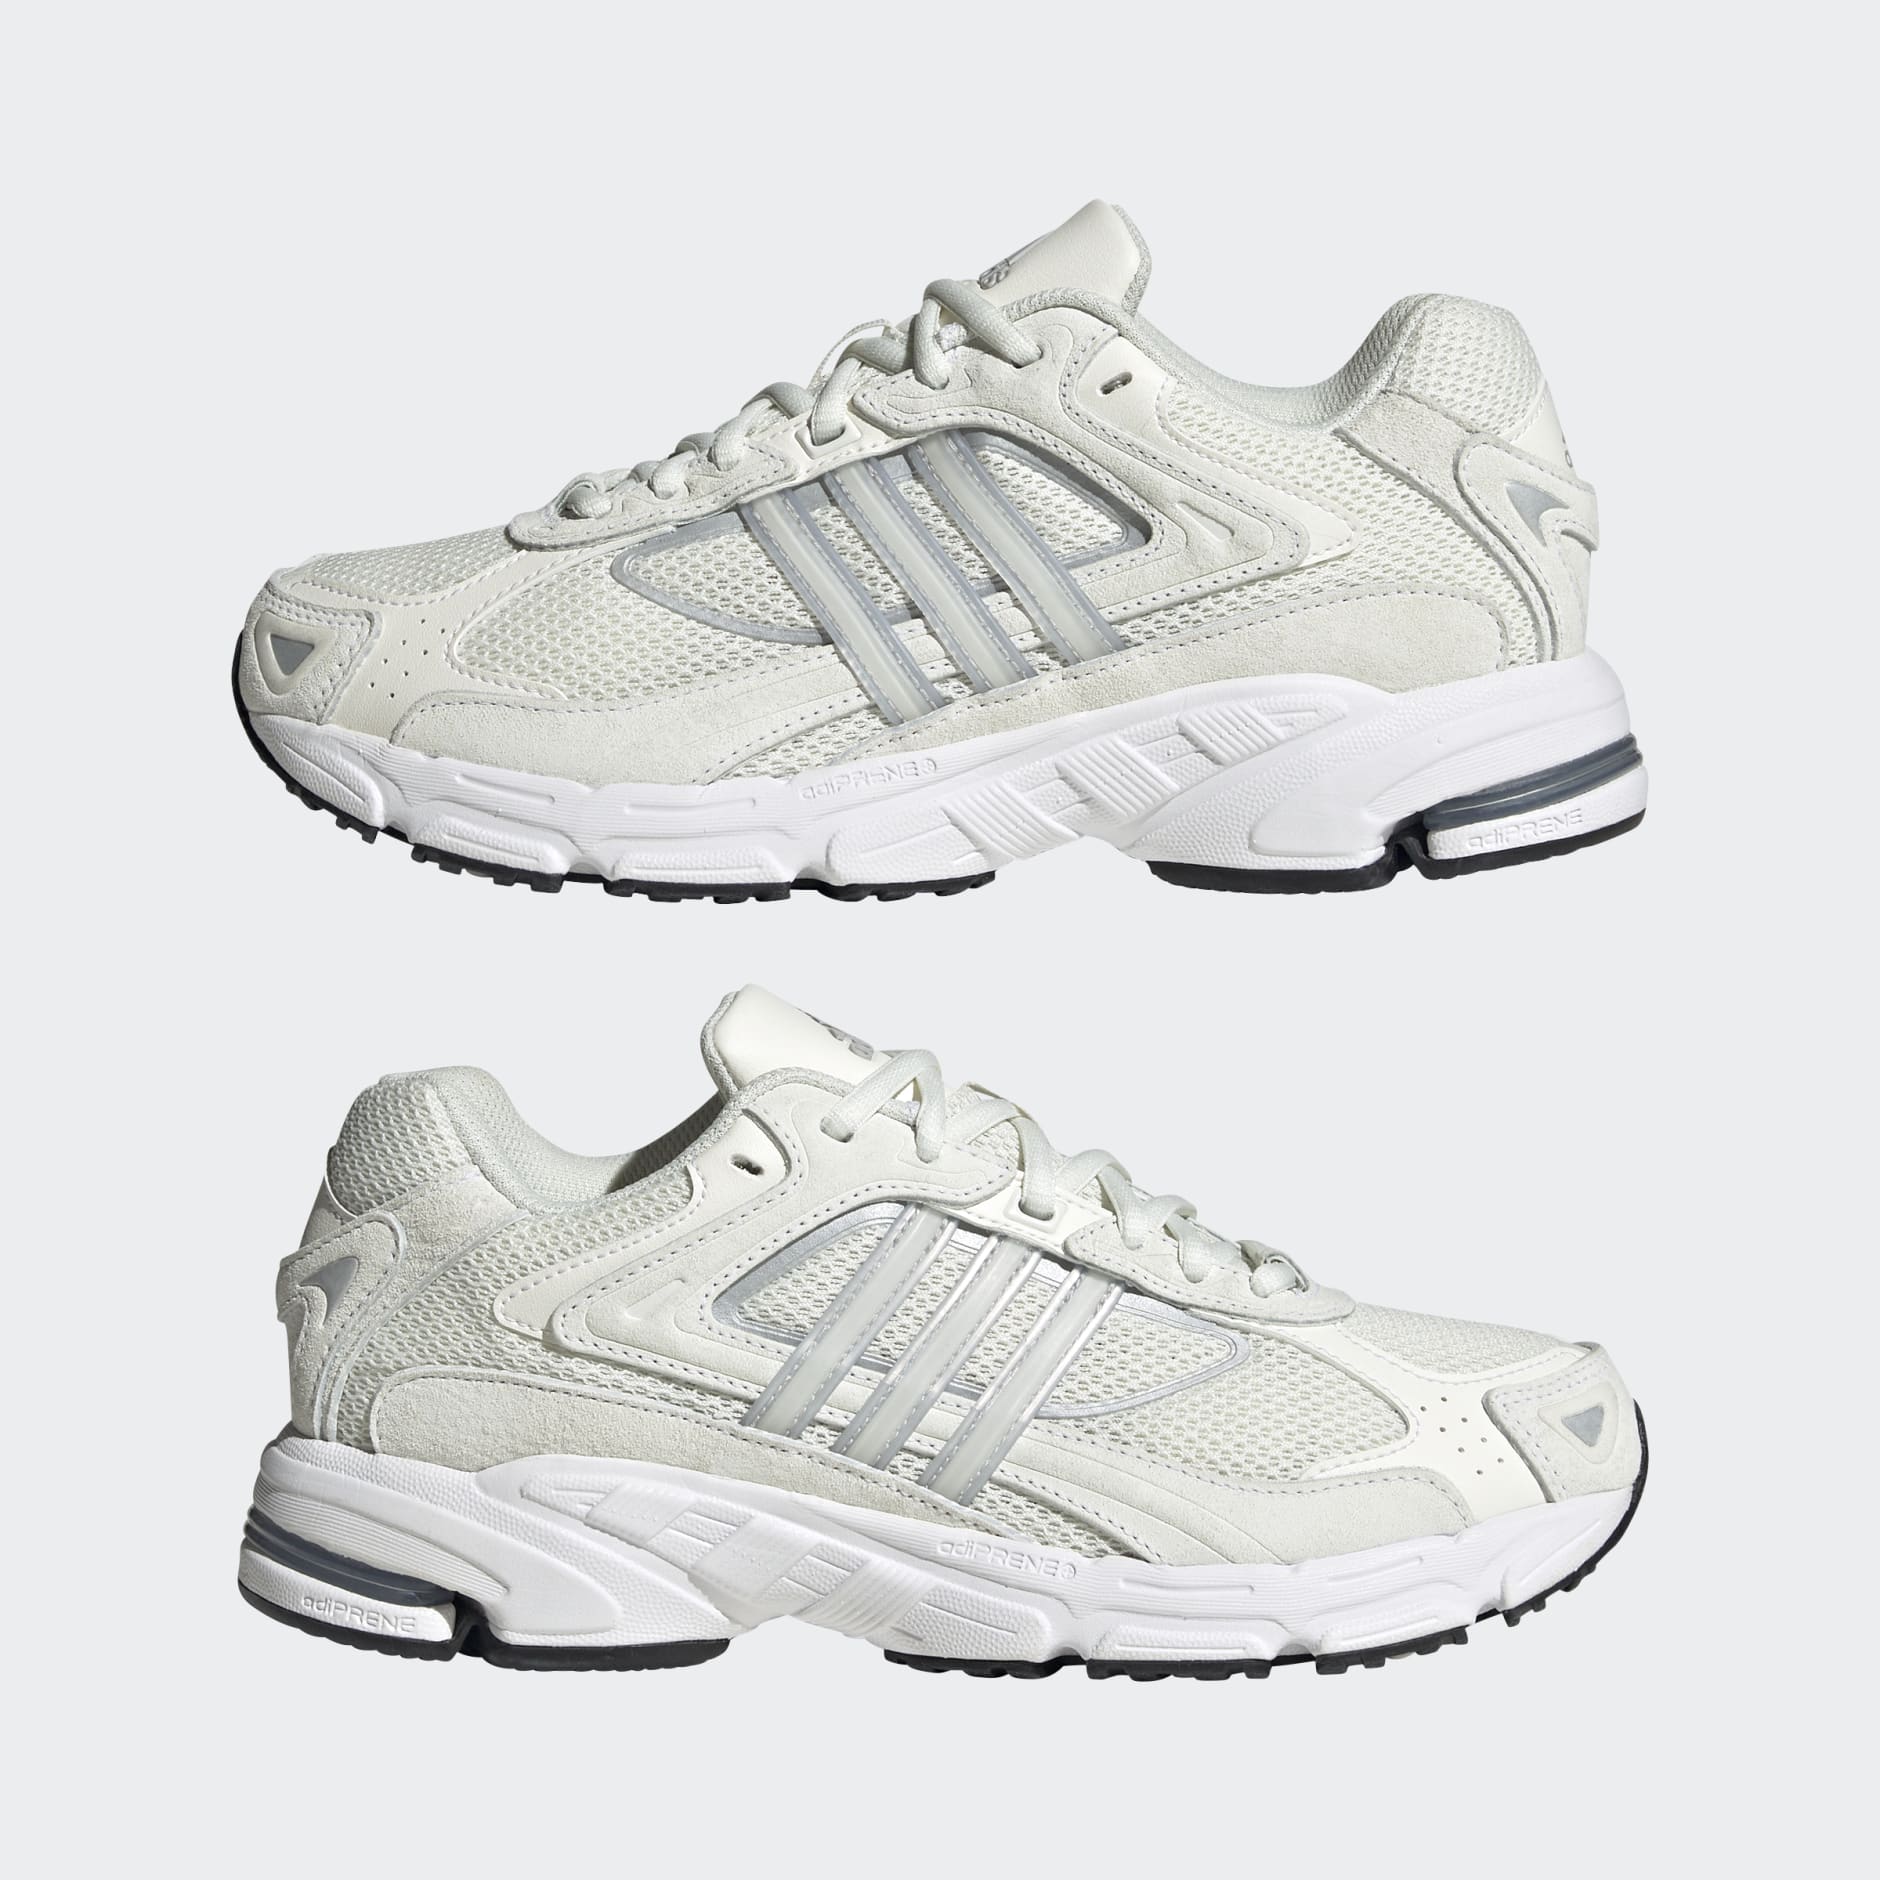 White - Response adidas Shoes KE CL adidas |